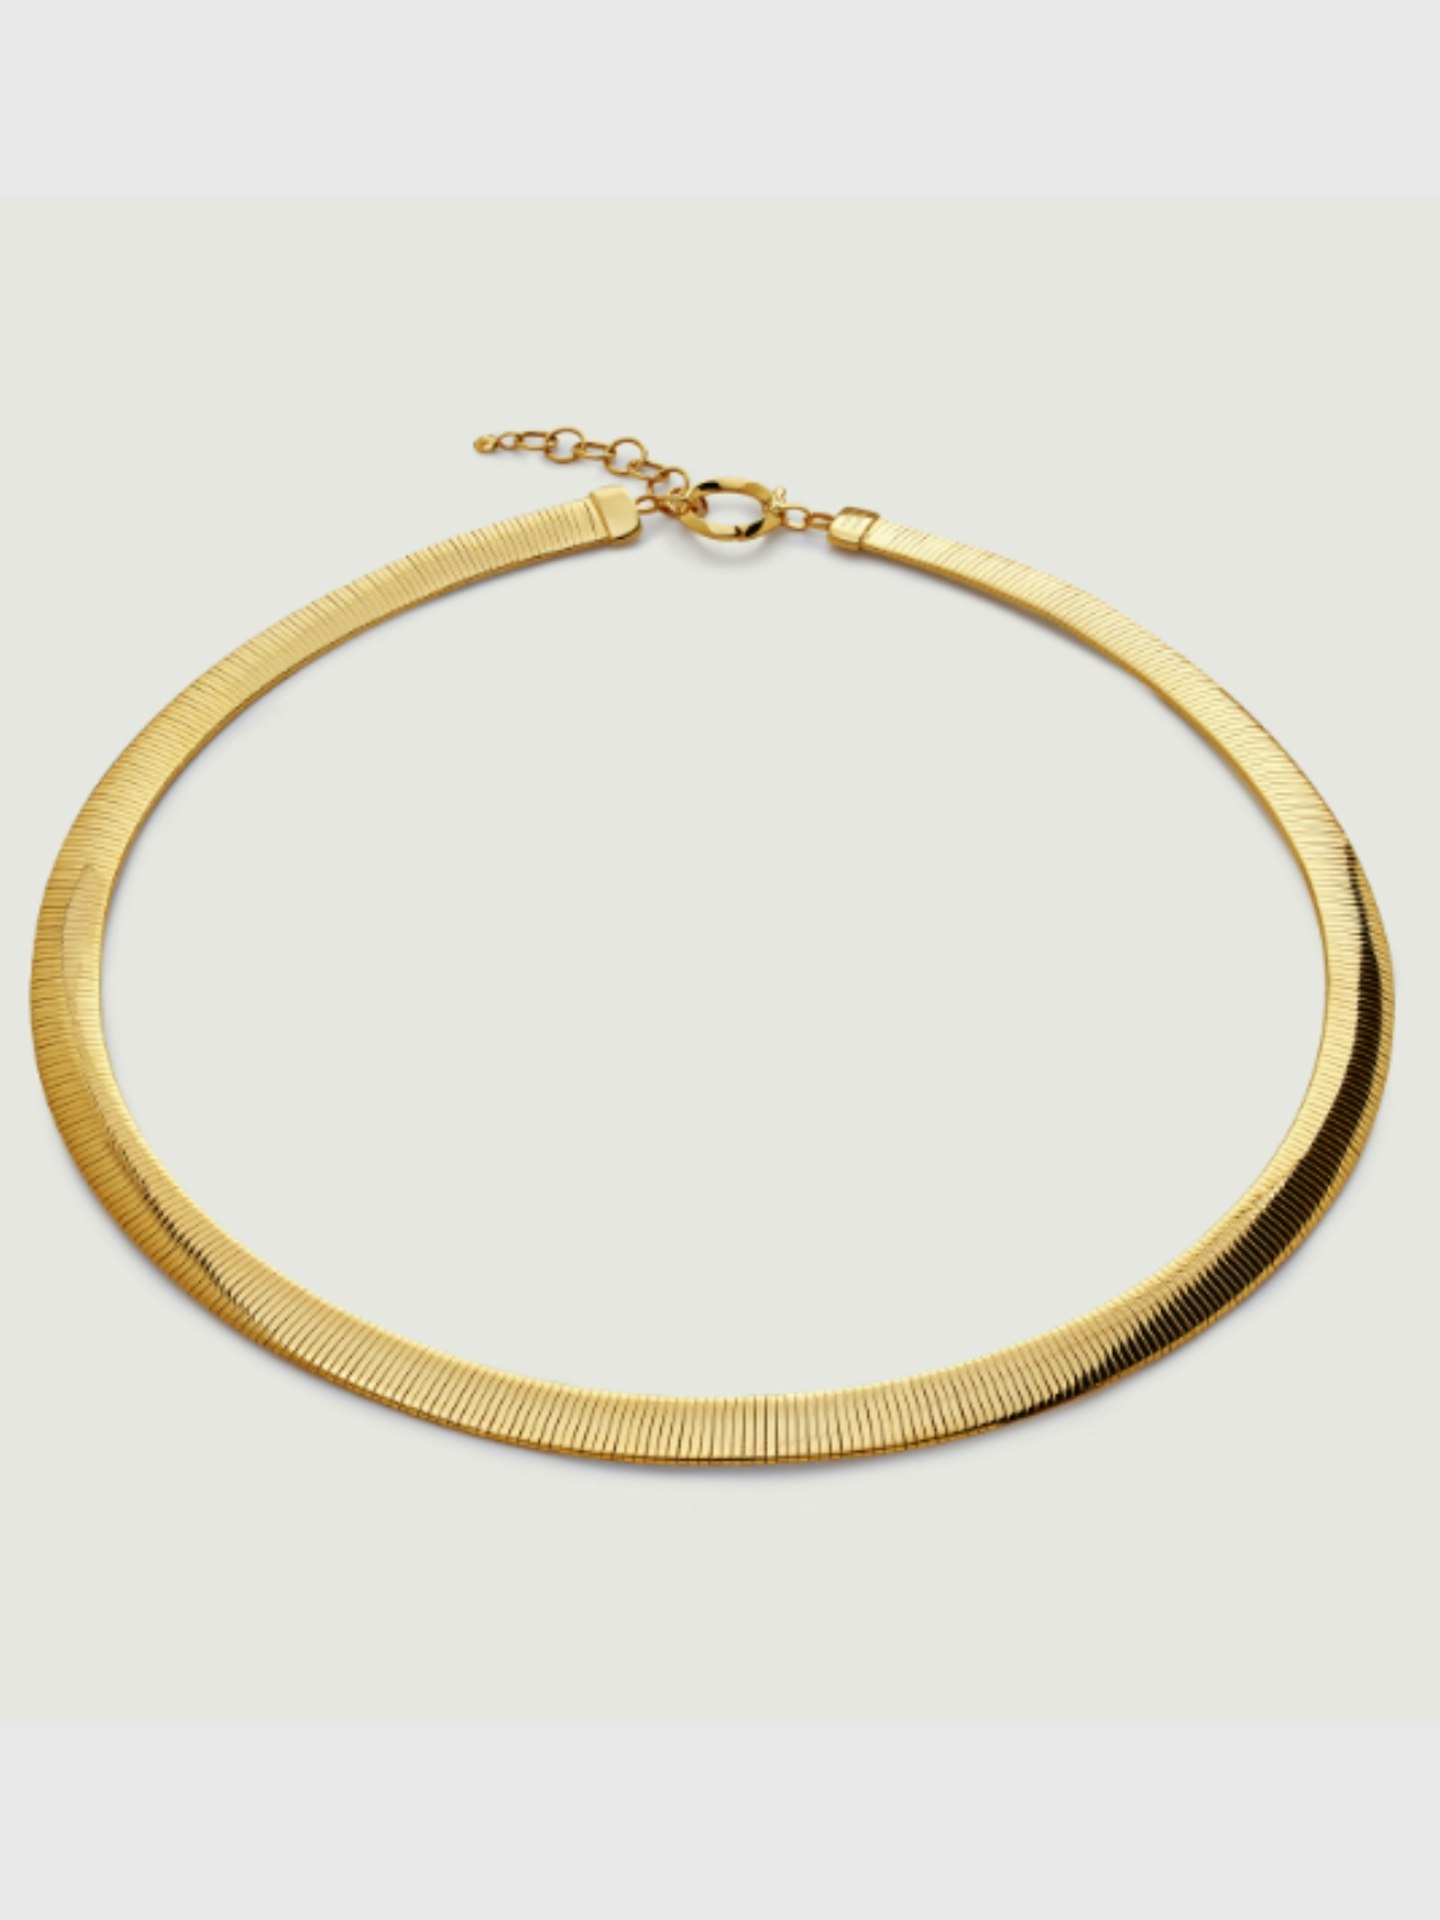 Monica Vinader, Power Collar Necklace Adjustable 41-46cm/16-18'